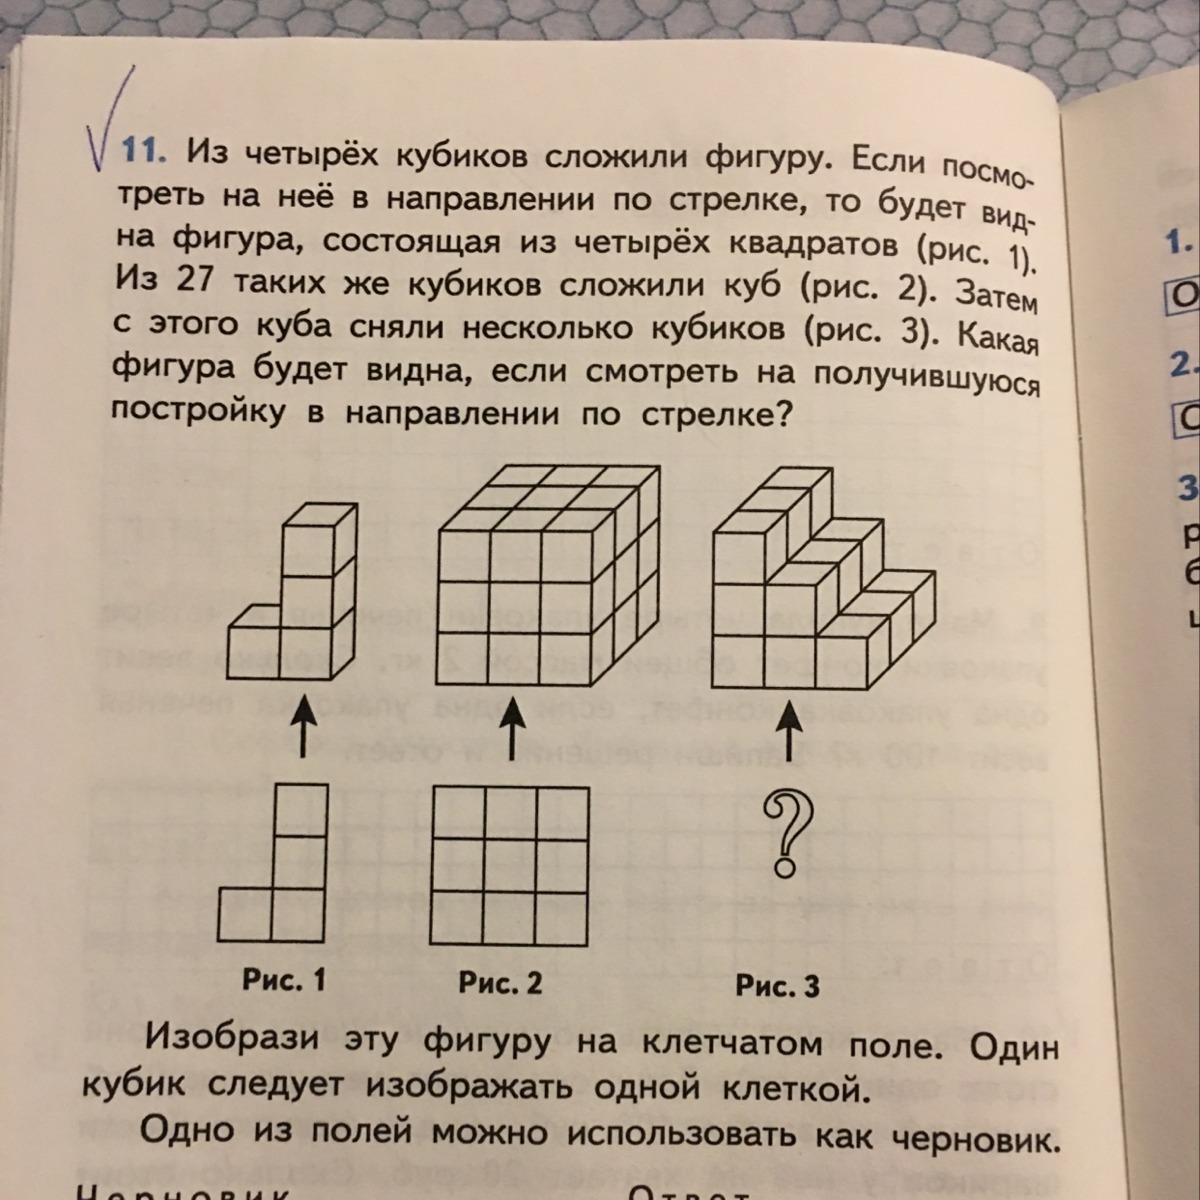 Из 4 одинаковых кубиков. Стишок про кубики. Из трёх кубиков сложили постройку.